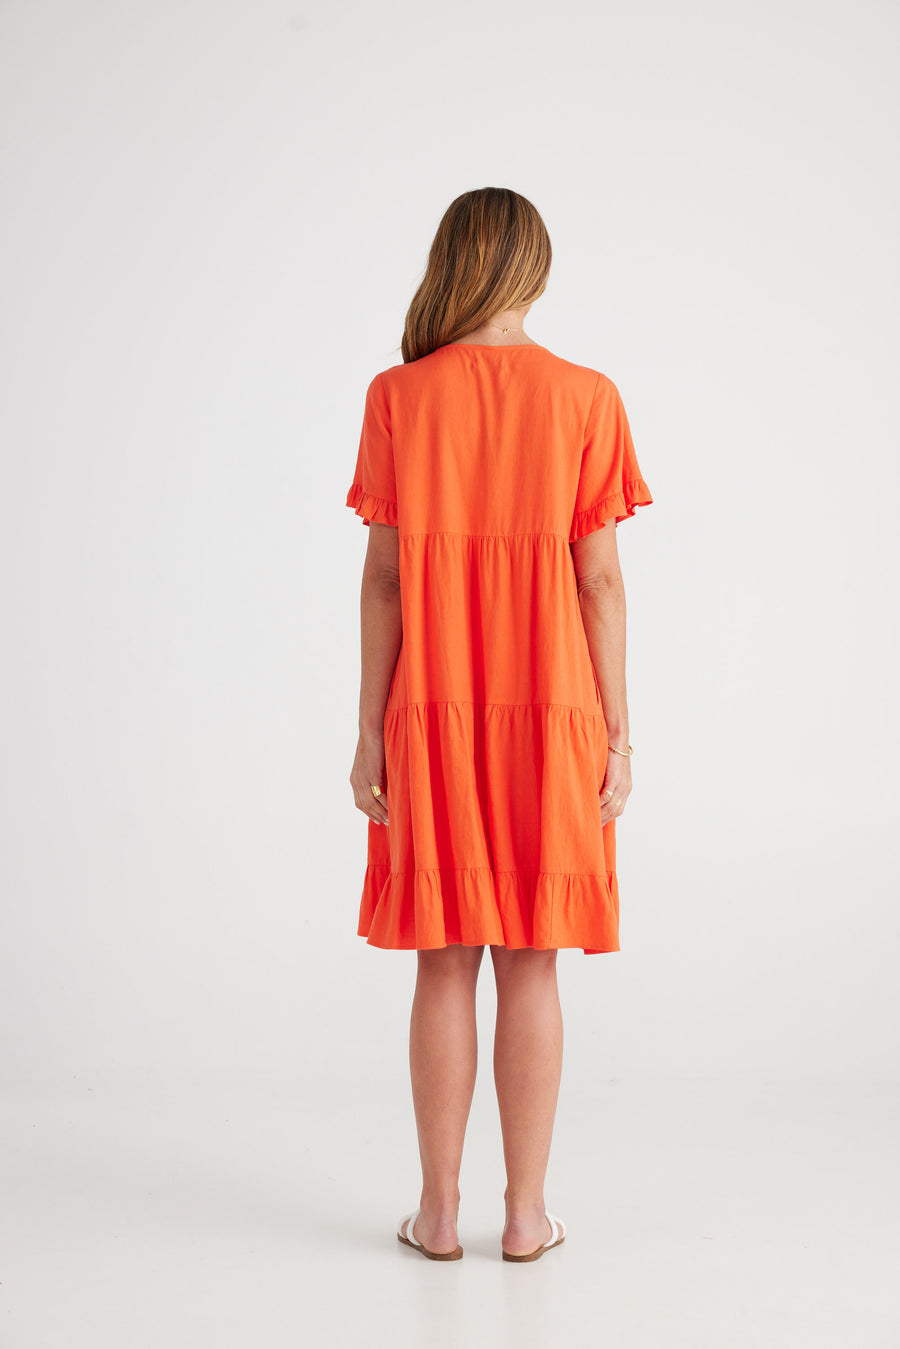 Clementine Dress - Mandarin